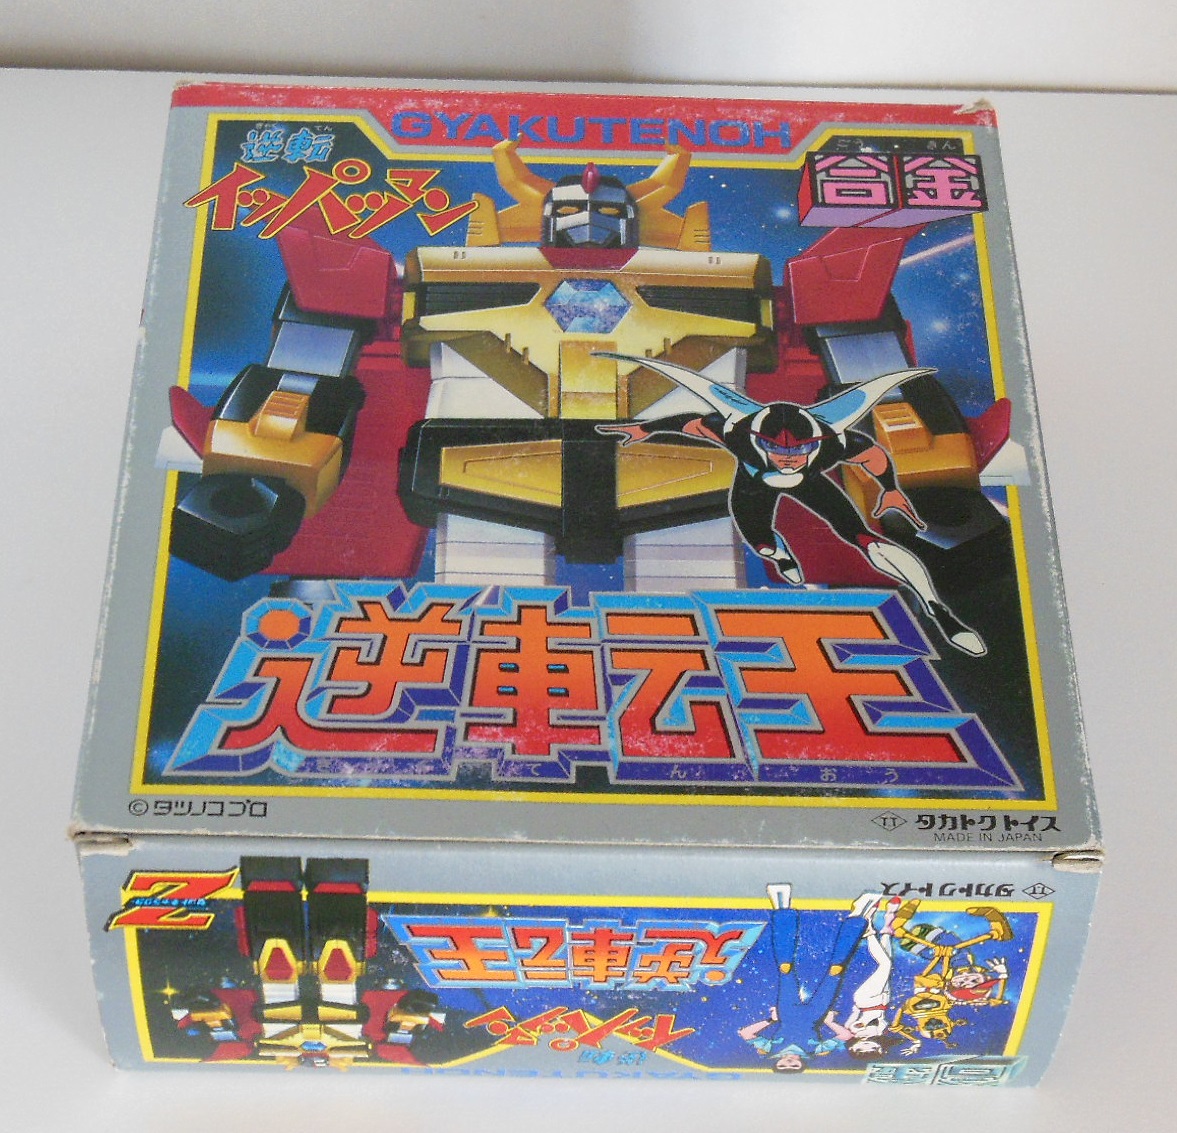 Gyakutenoh ST Takatoku Toys 1982 Z-Gokin Gyakuten-oh front-bottom of box from the anime series Gyakuten! Ippatsuman (逆転!イッパツマン) from 1982-1983